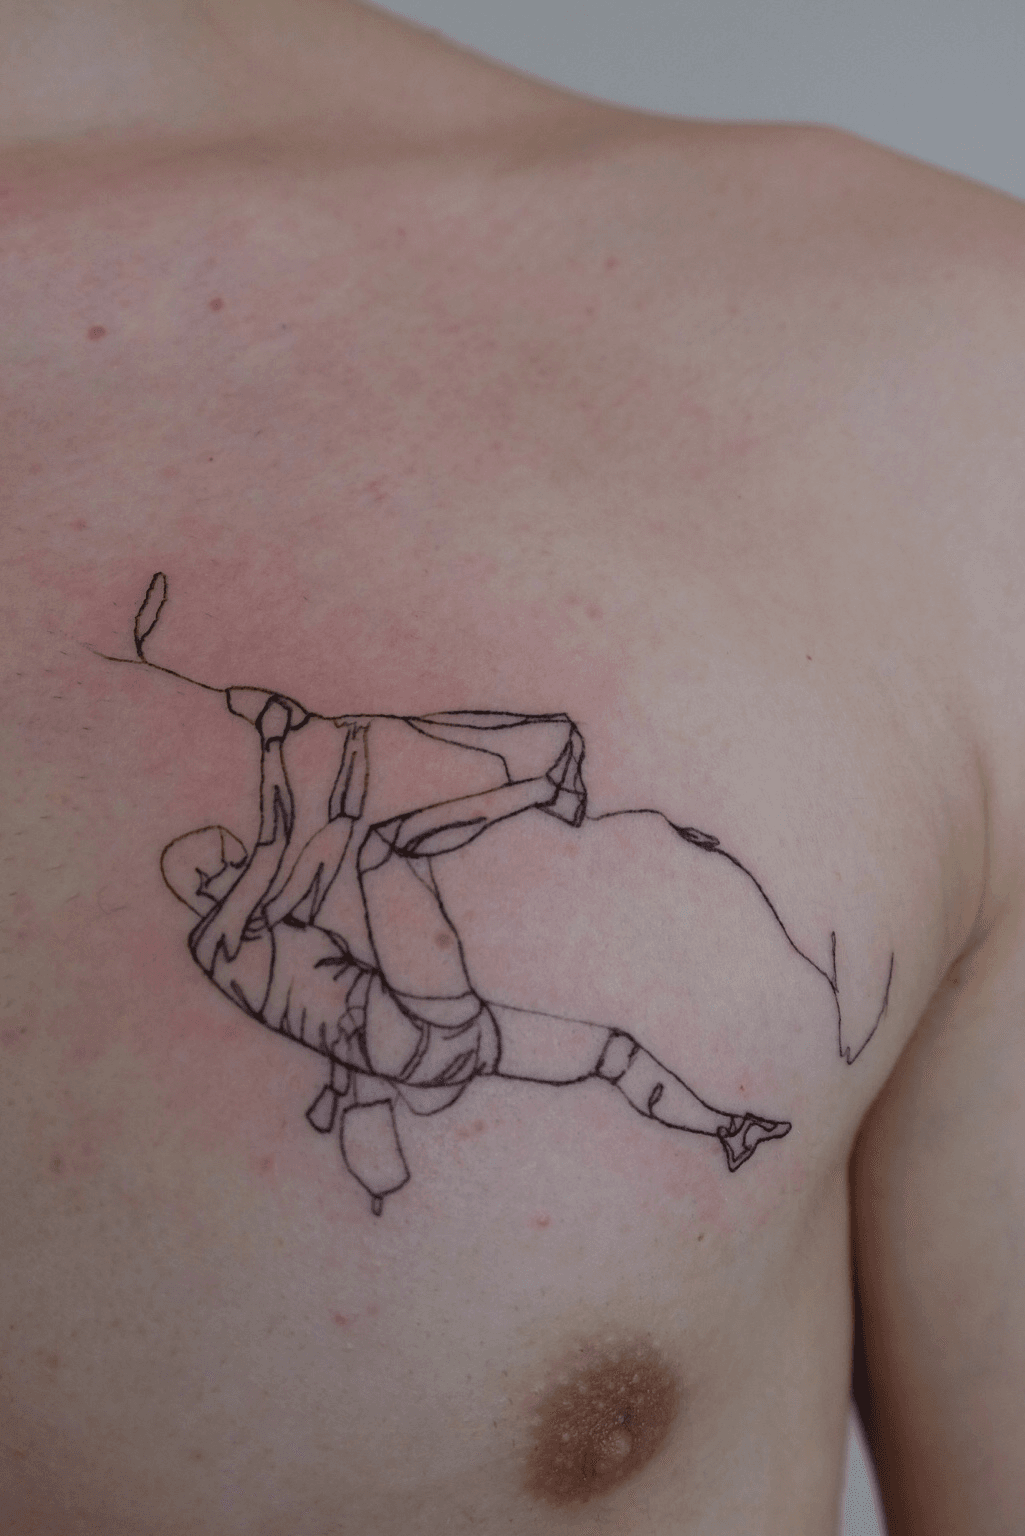 Honeymoon rock climbing tattoo Franki Frans  Barcelona Tattoo Ink  Barcelona Spain  rtattoos